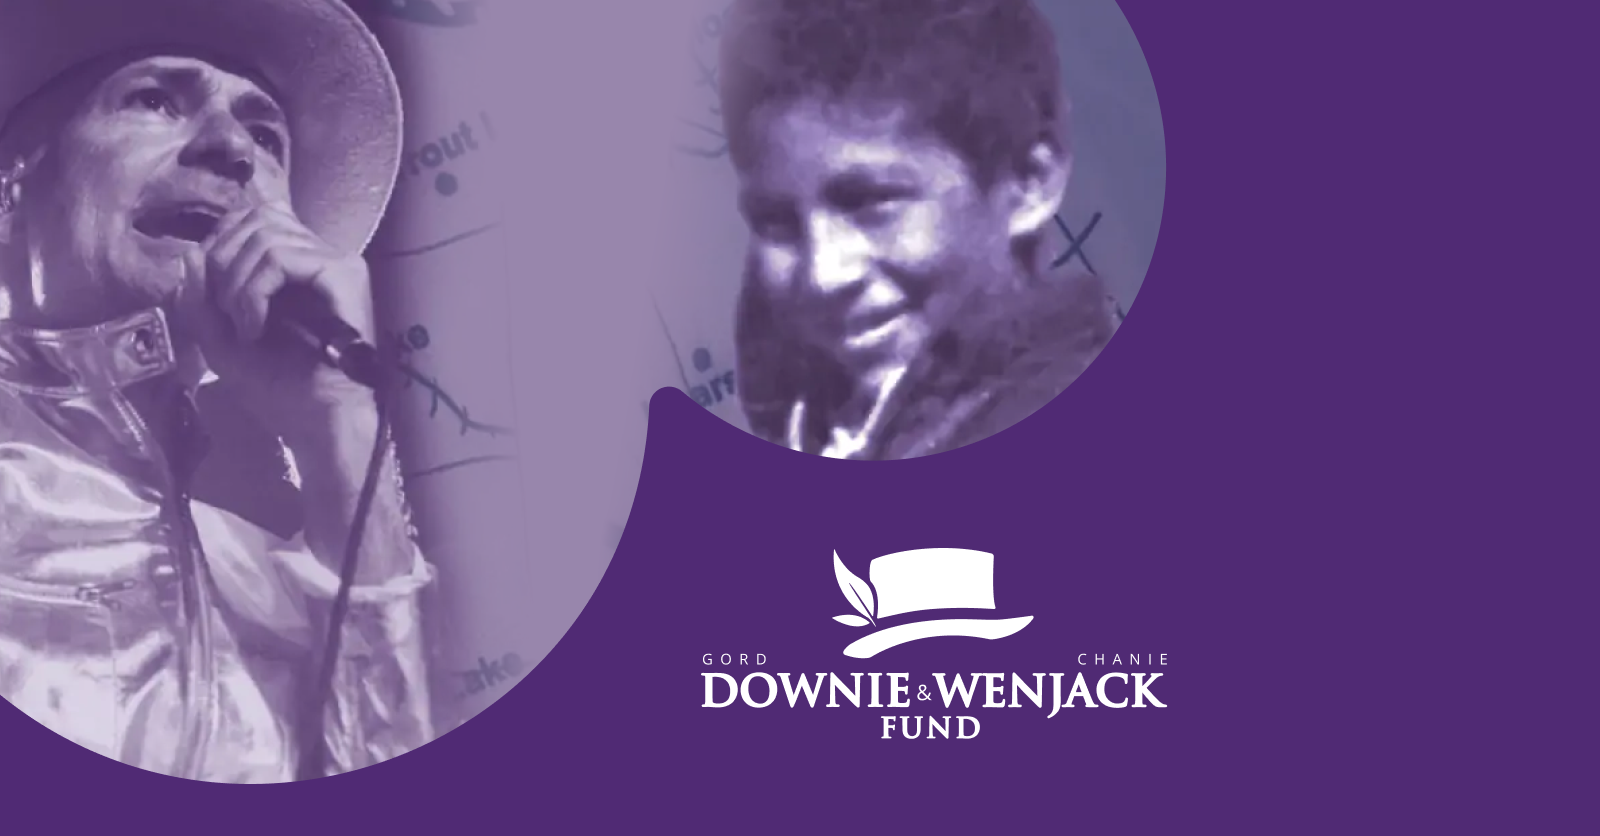 Legacy Schools Resources - The Gord Downie & Chanie Wenjack Fund